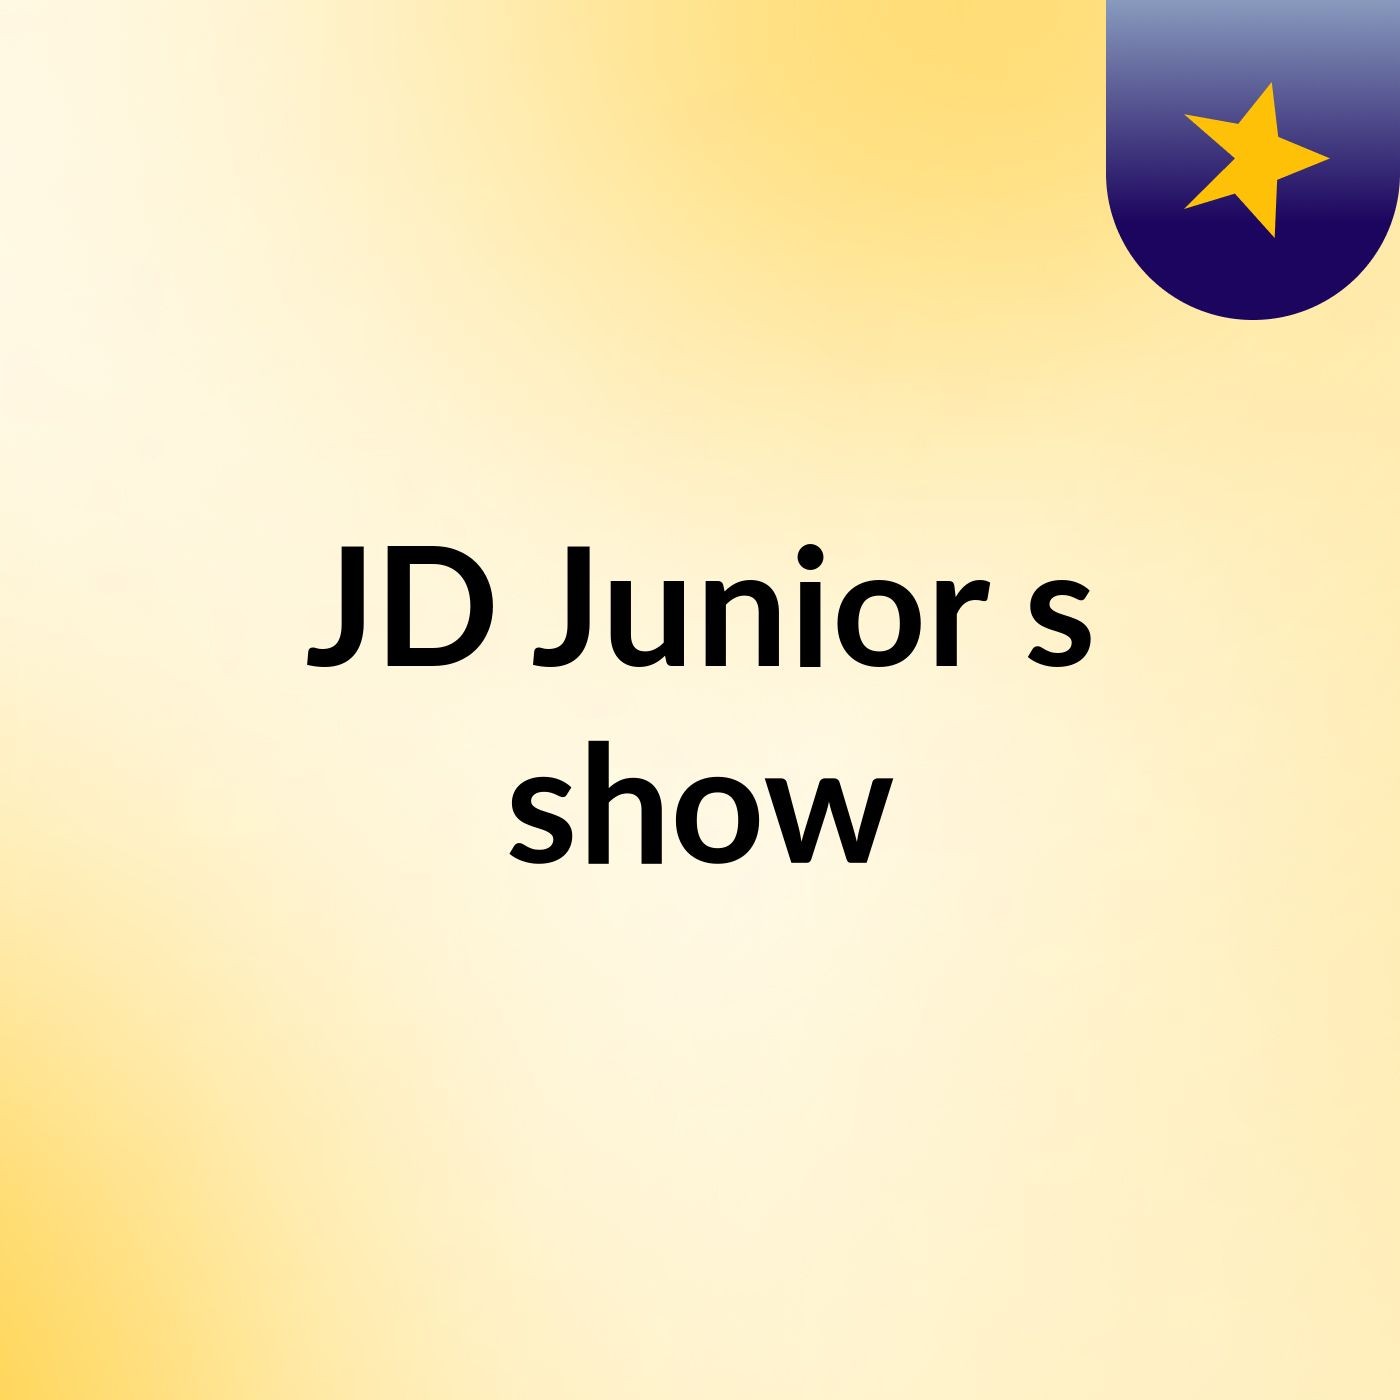 JD Junior's show